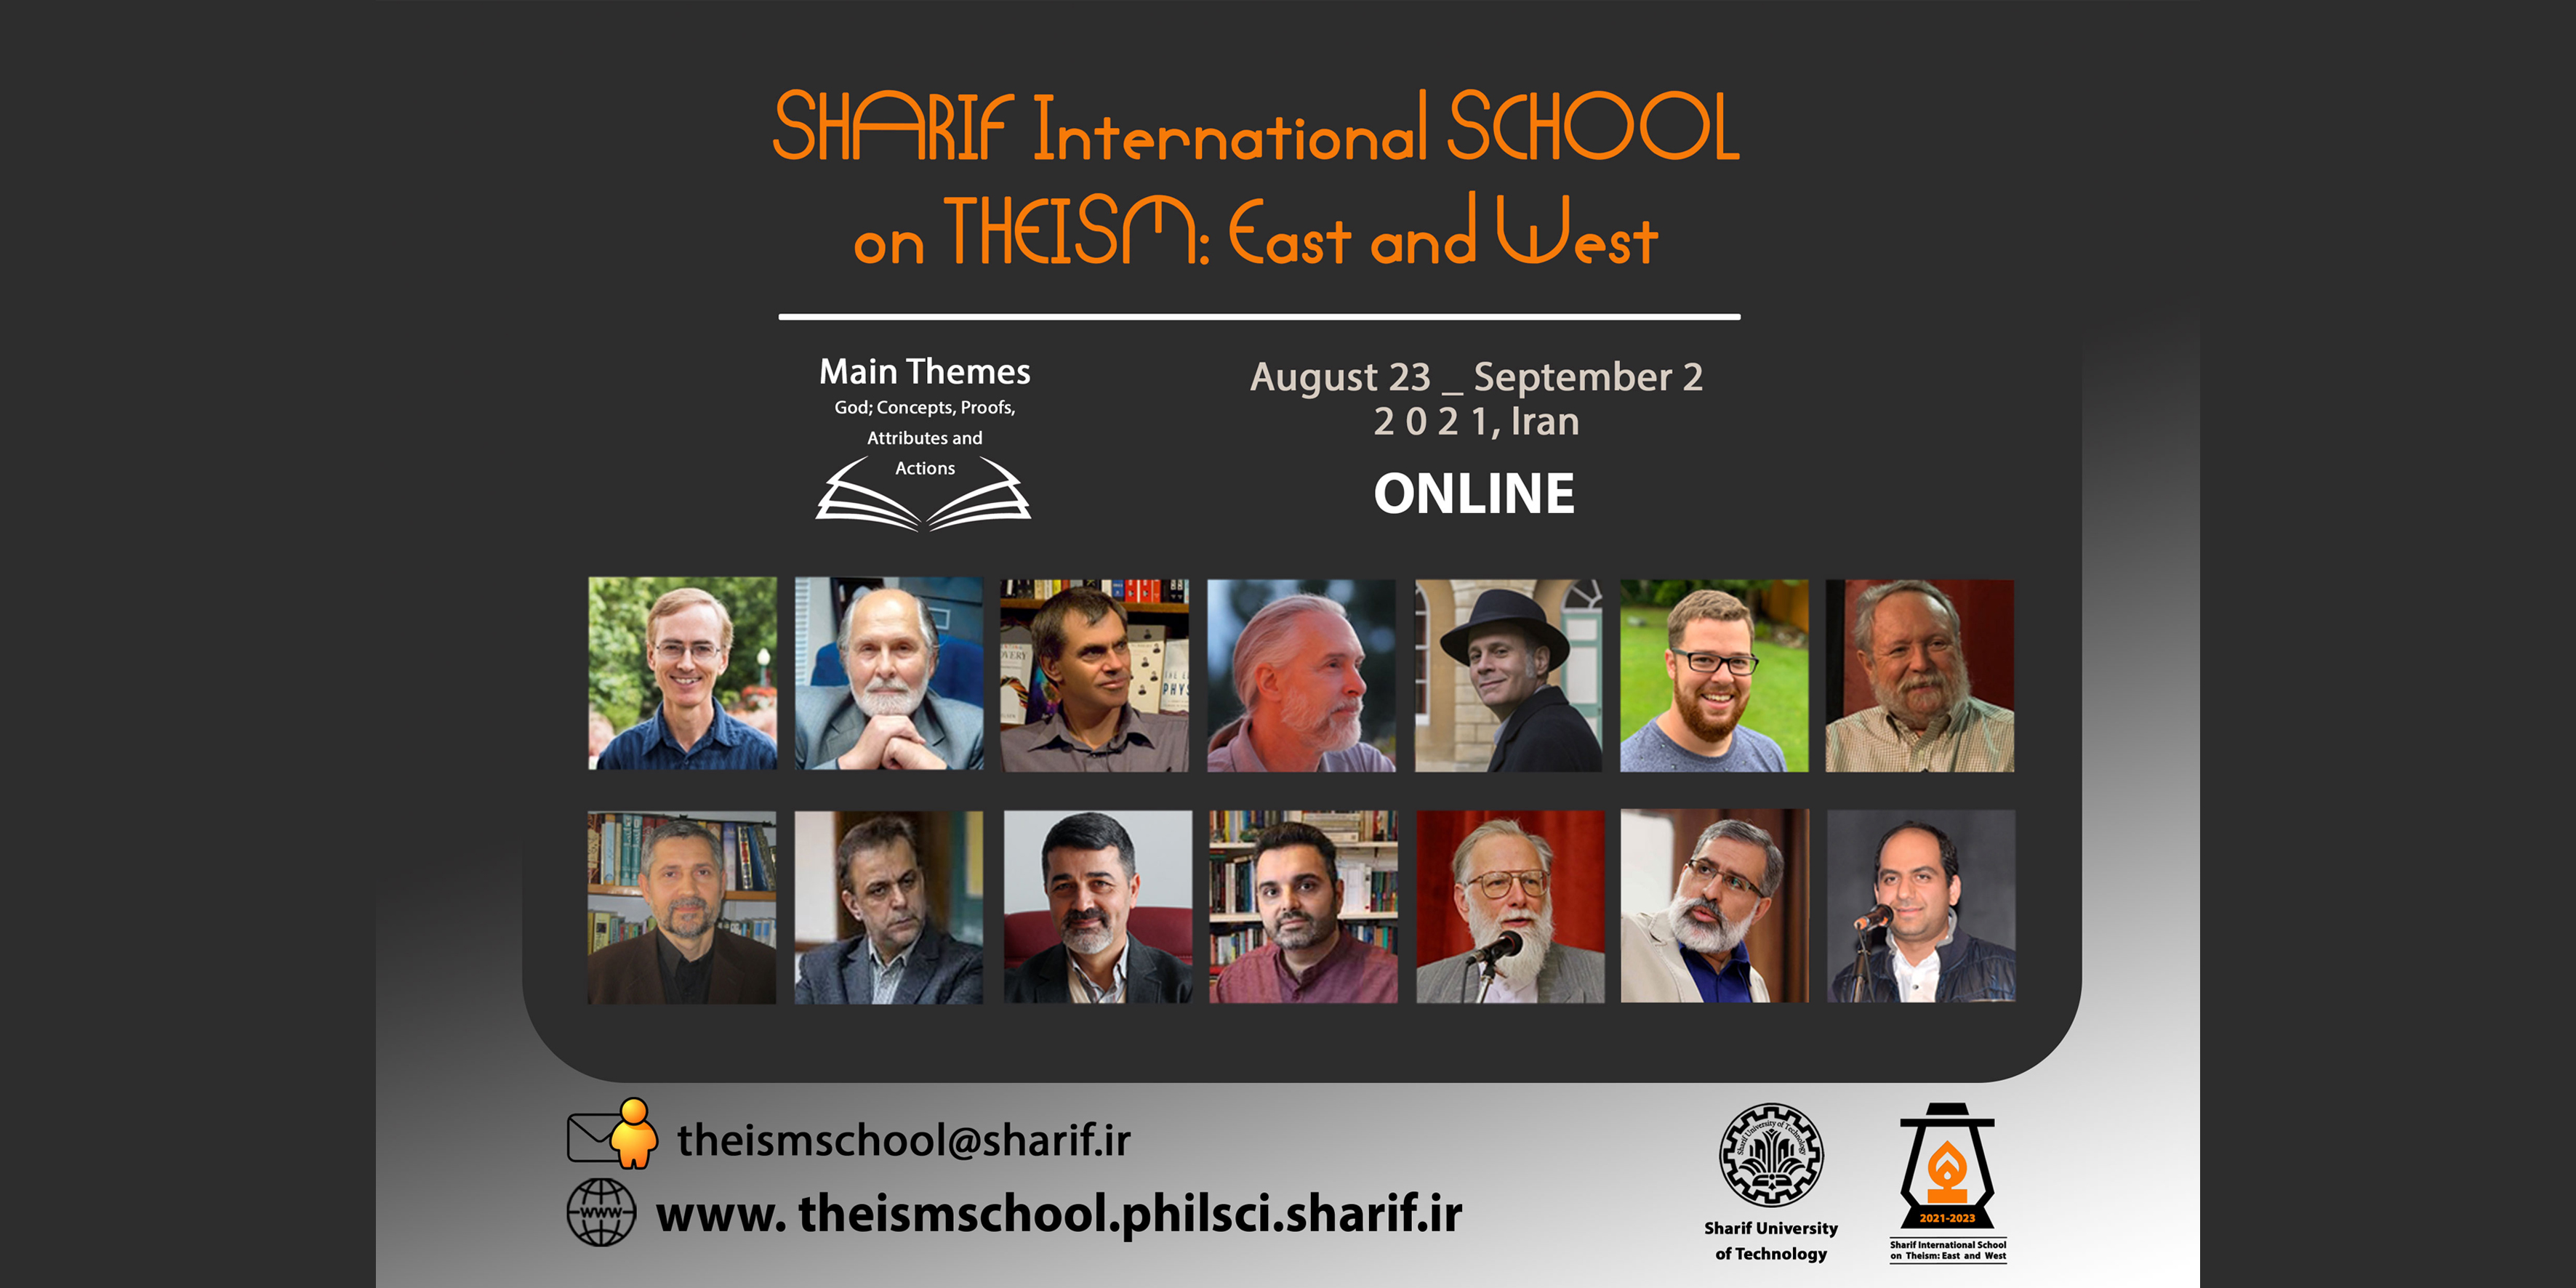 Sharif International School On Theism: East And West, Tehran, Iran